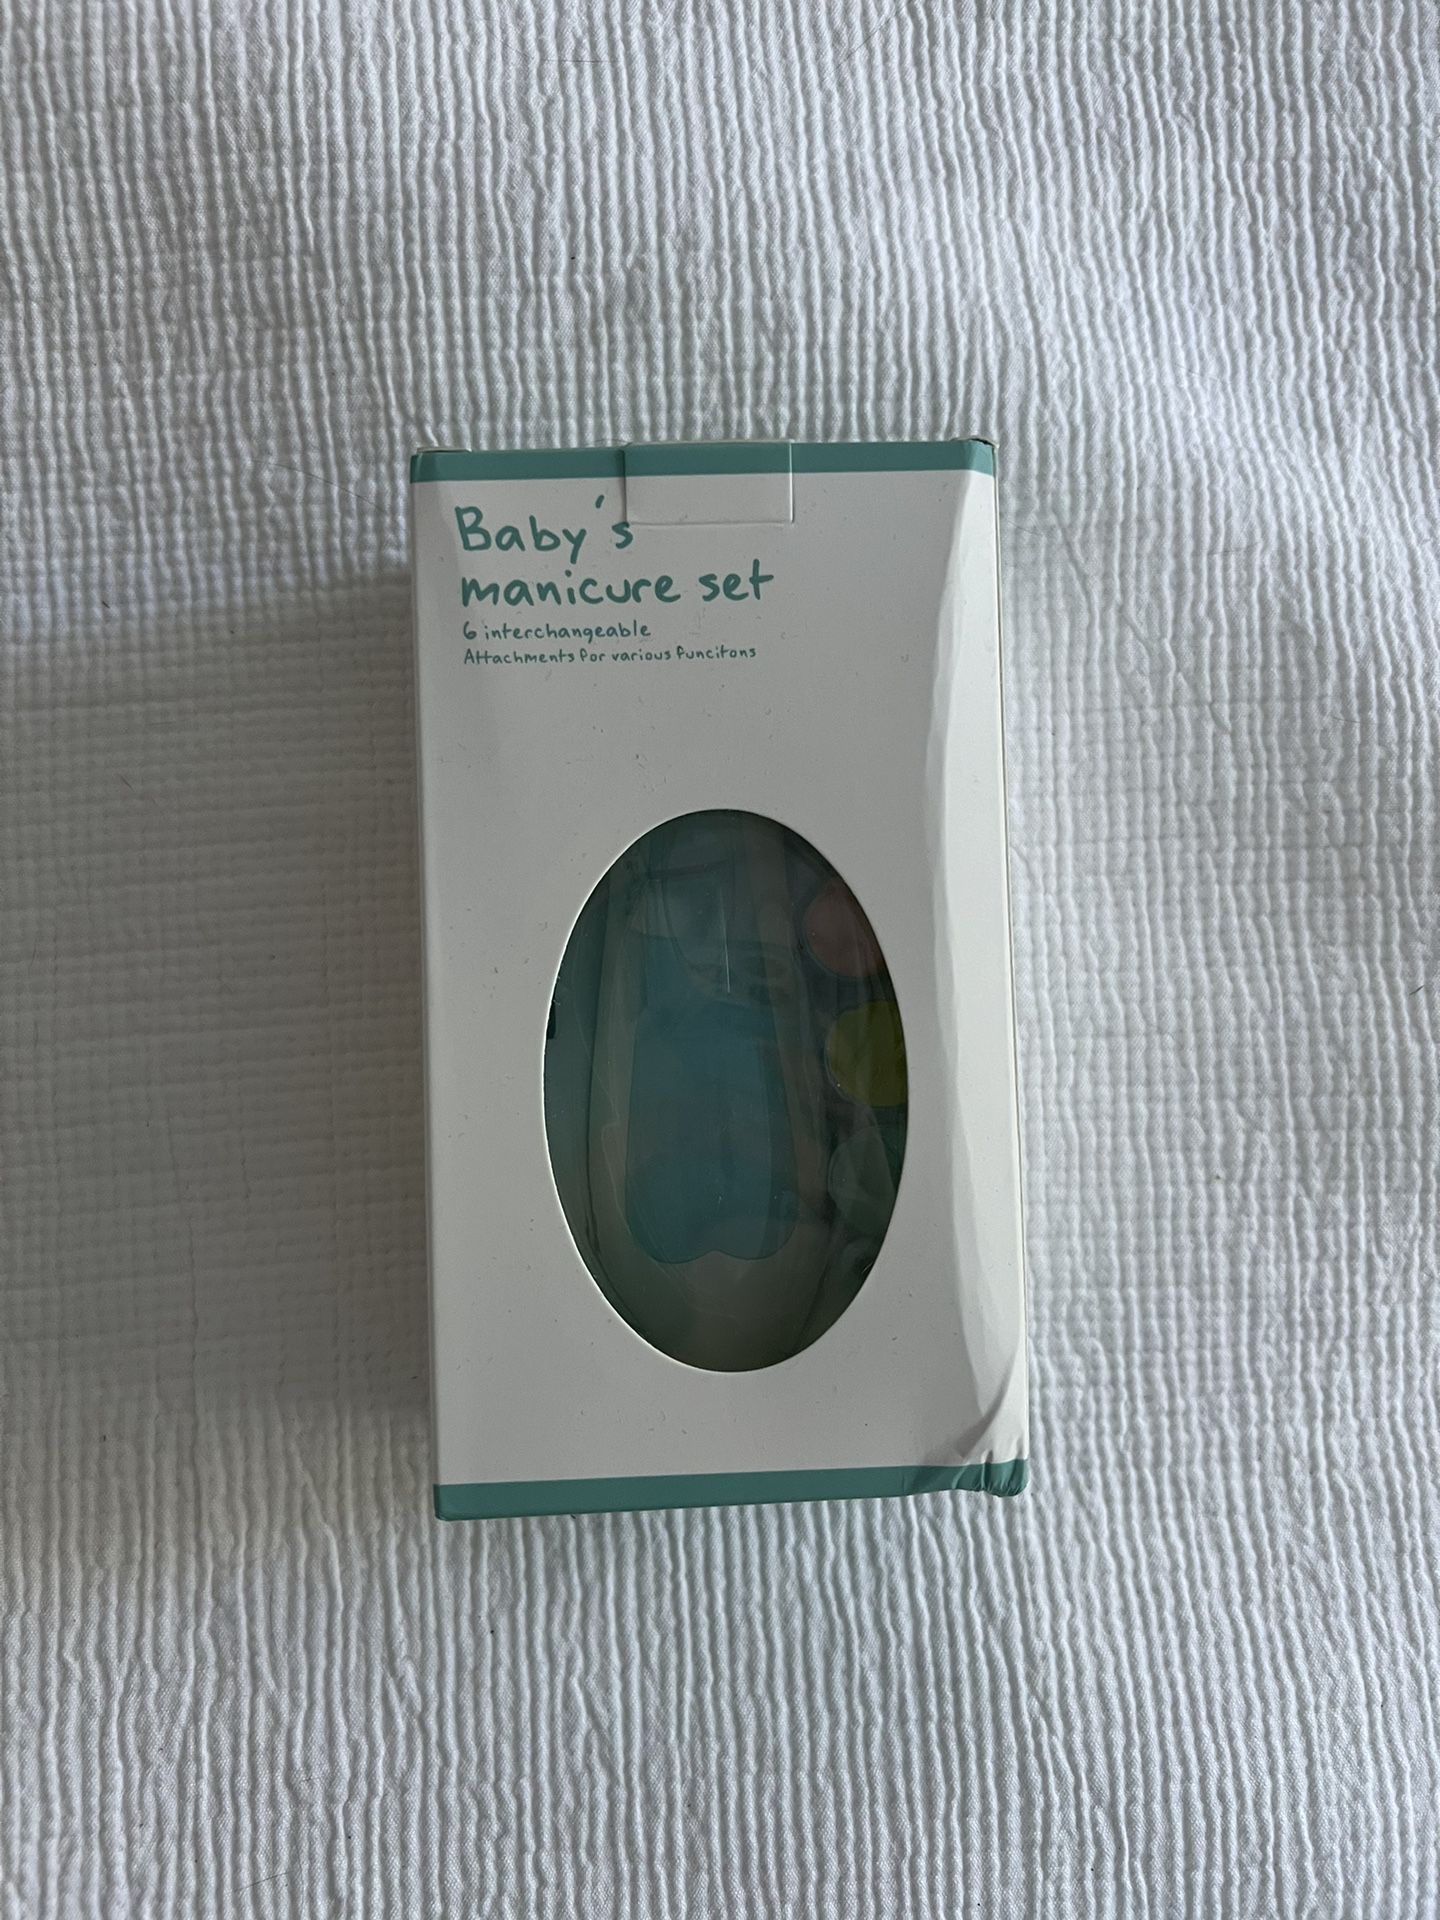 Baby manicure set